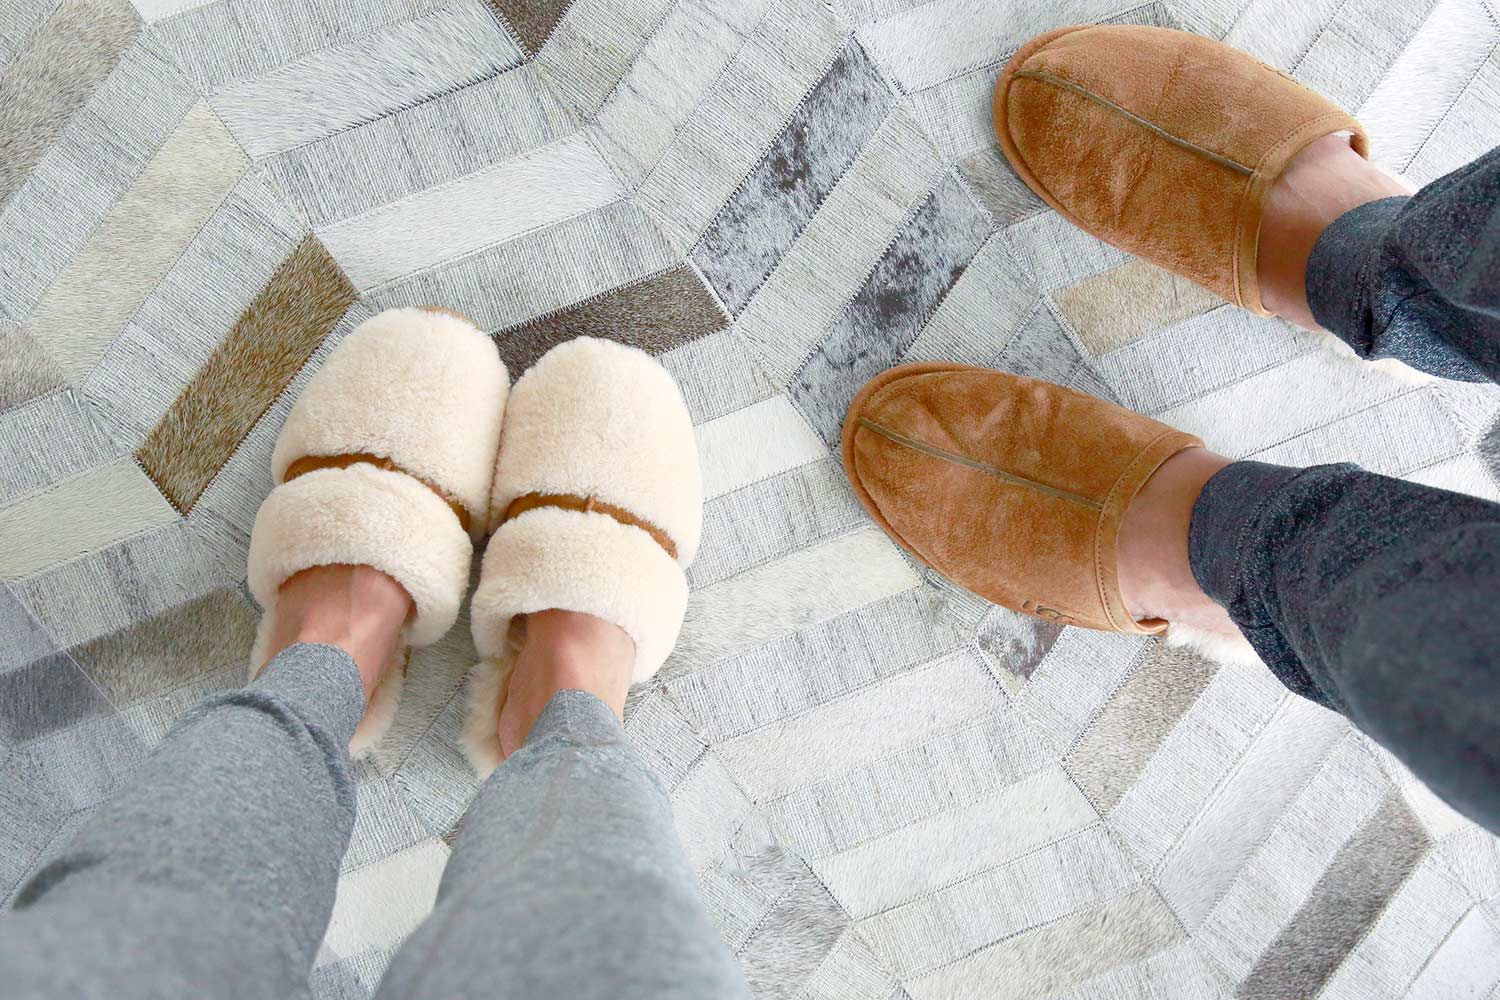 wearing slippers inside home